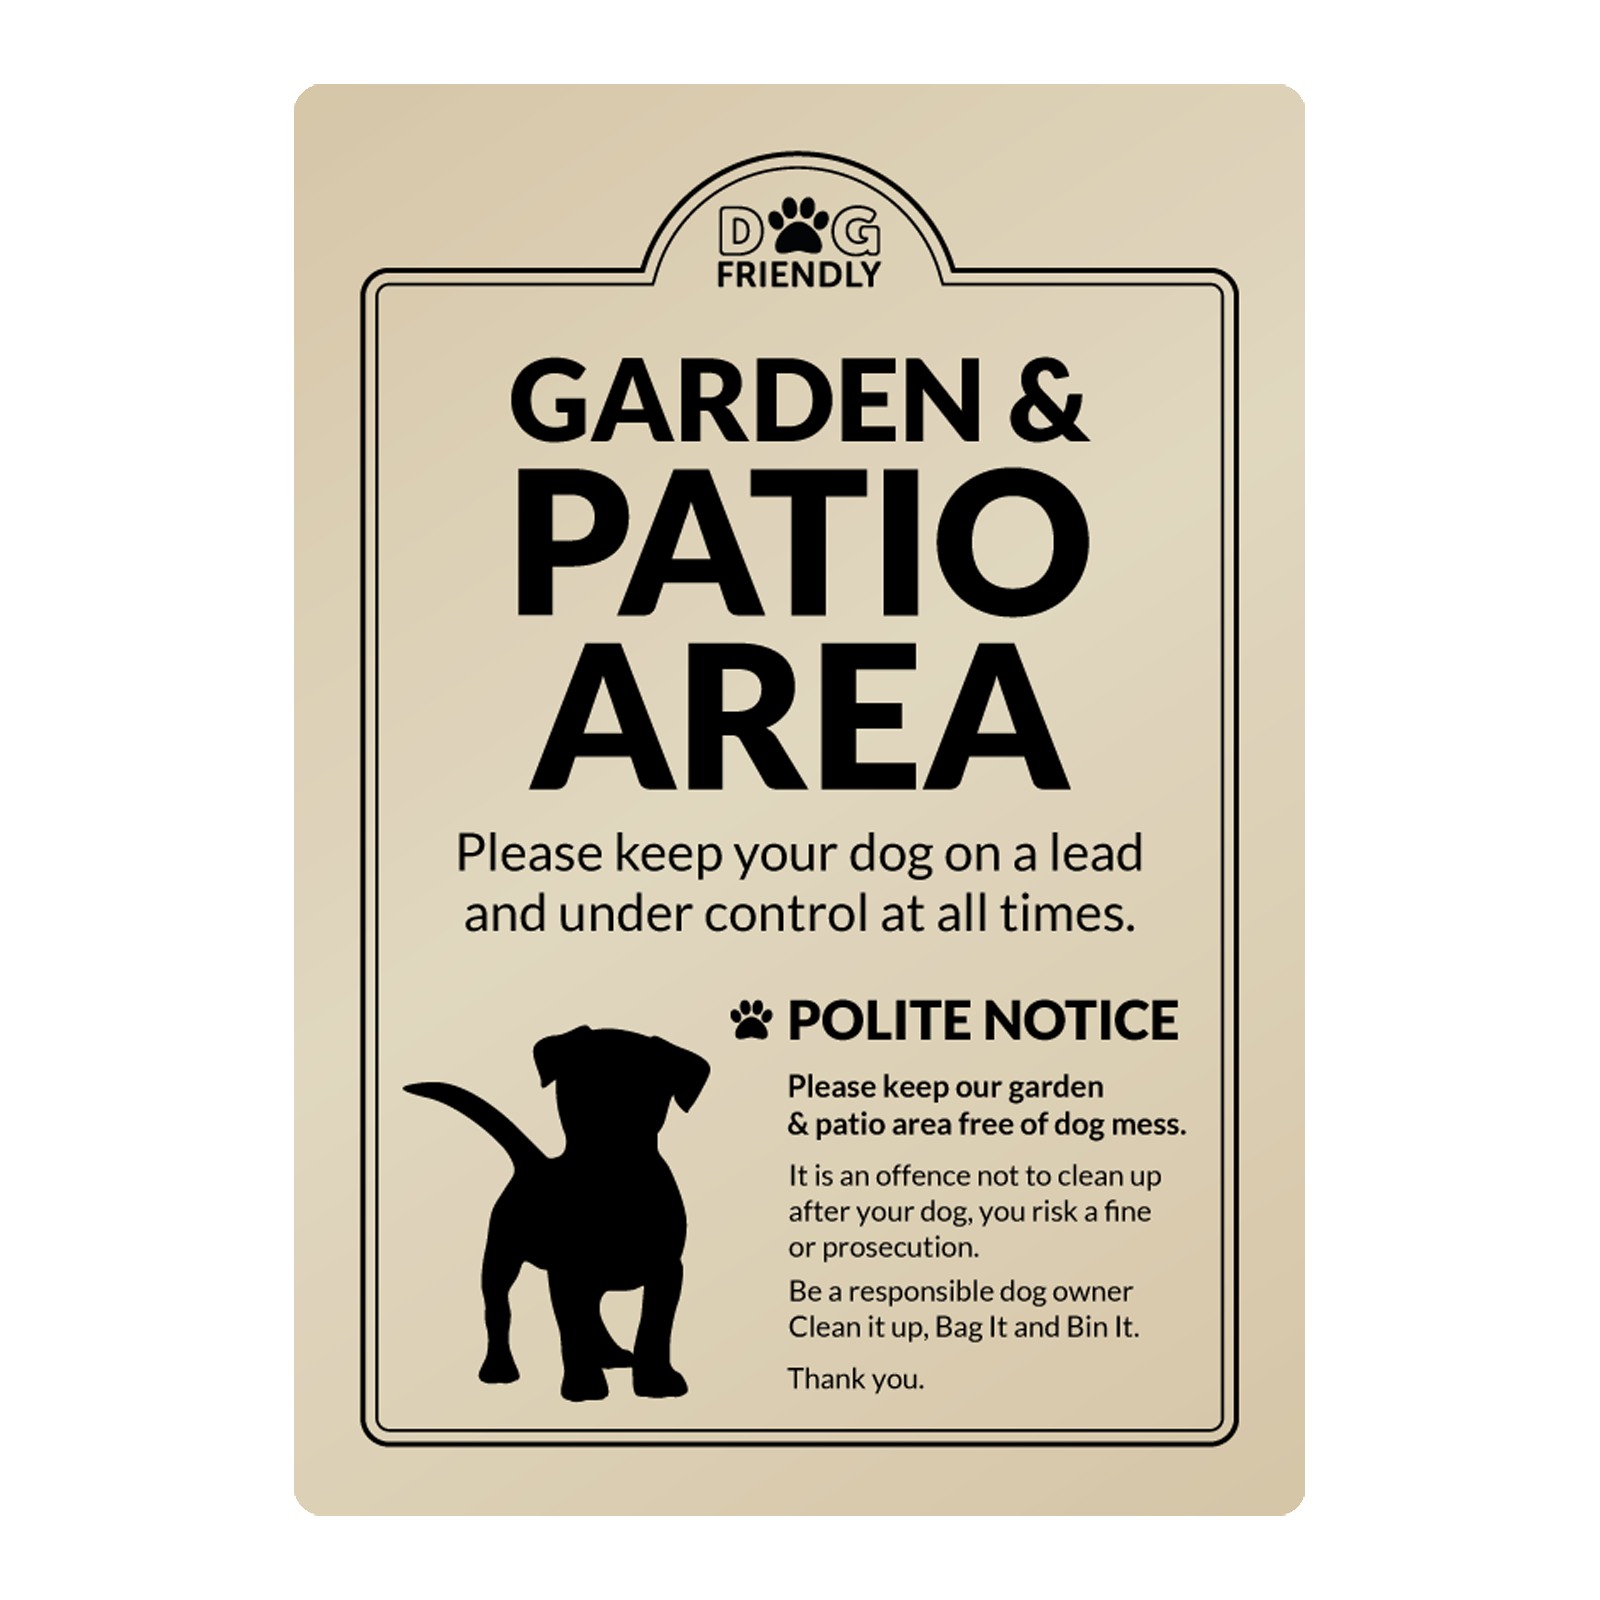 Dog Friendly Garden & Patio Area Polite Notice wall mounted Exterior Sign